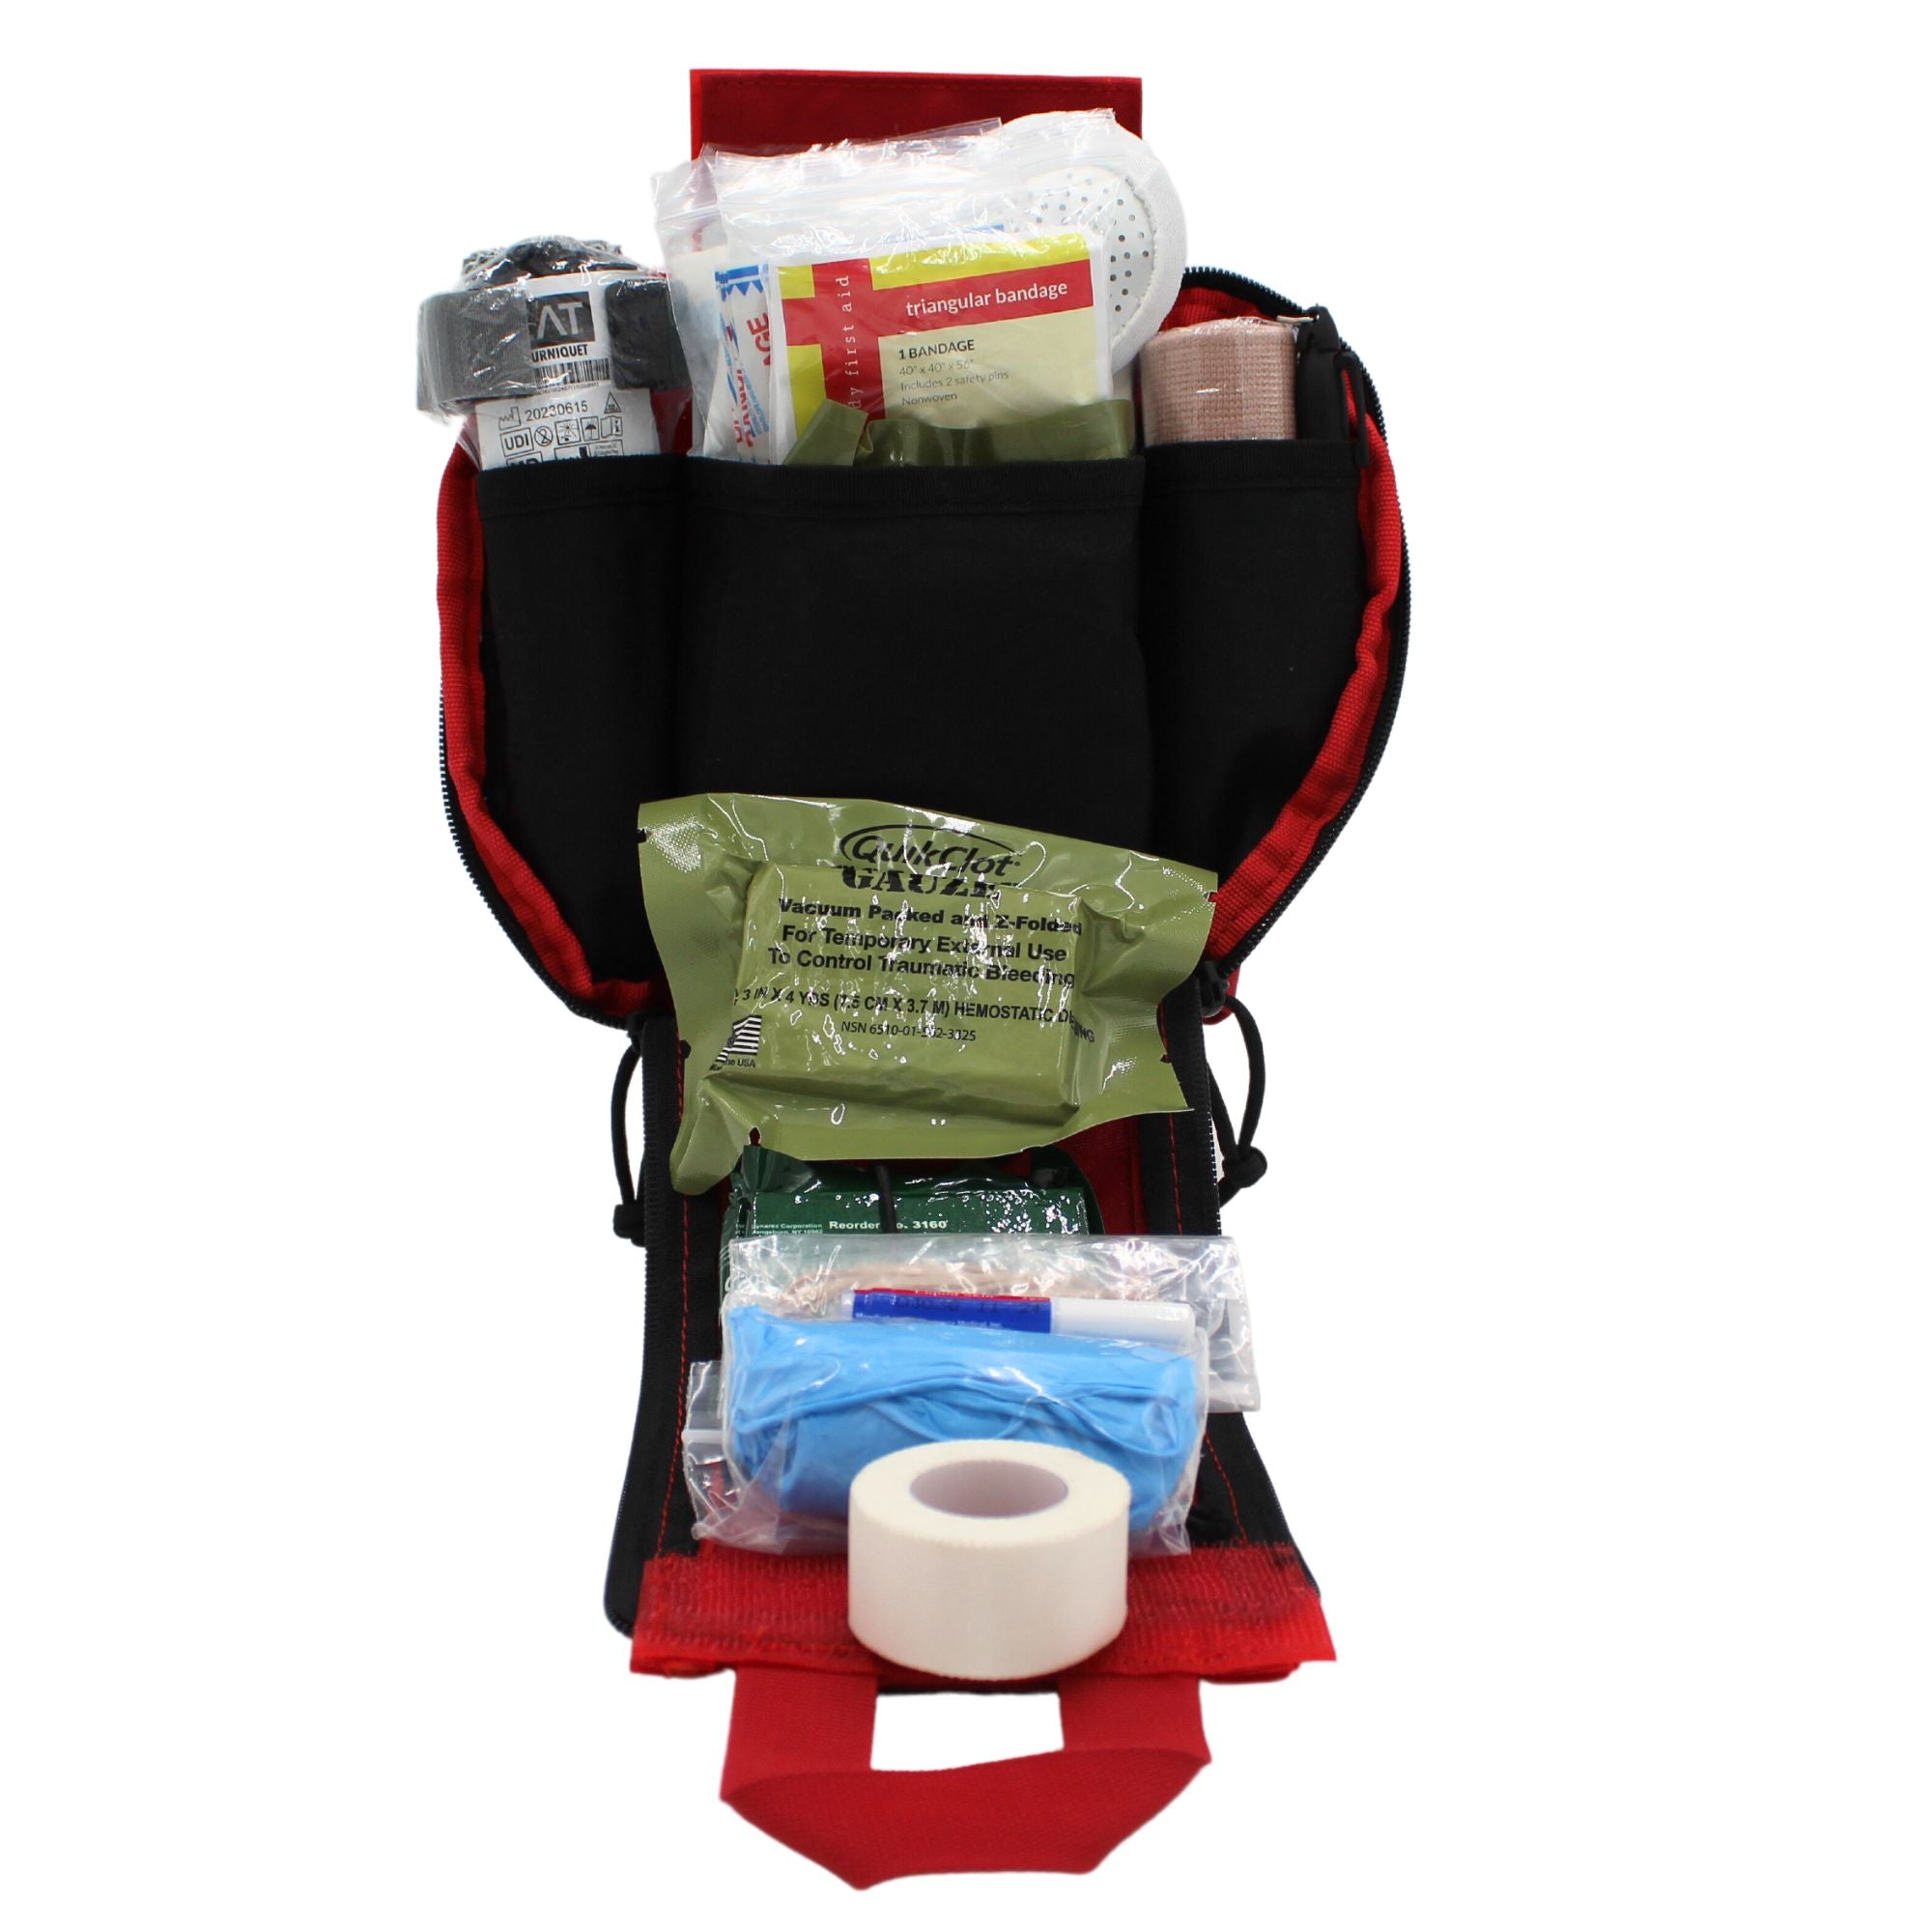 ViTAC Tactical Individual First Aid Kit (iFAK)